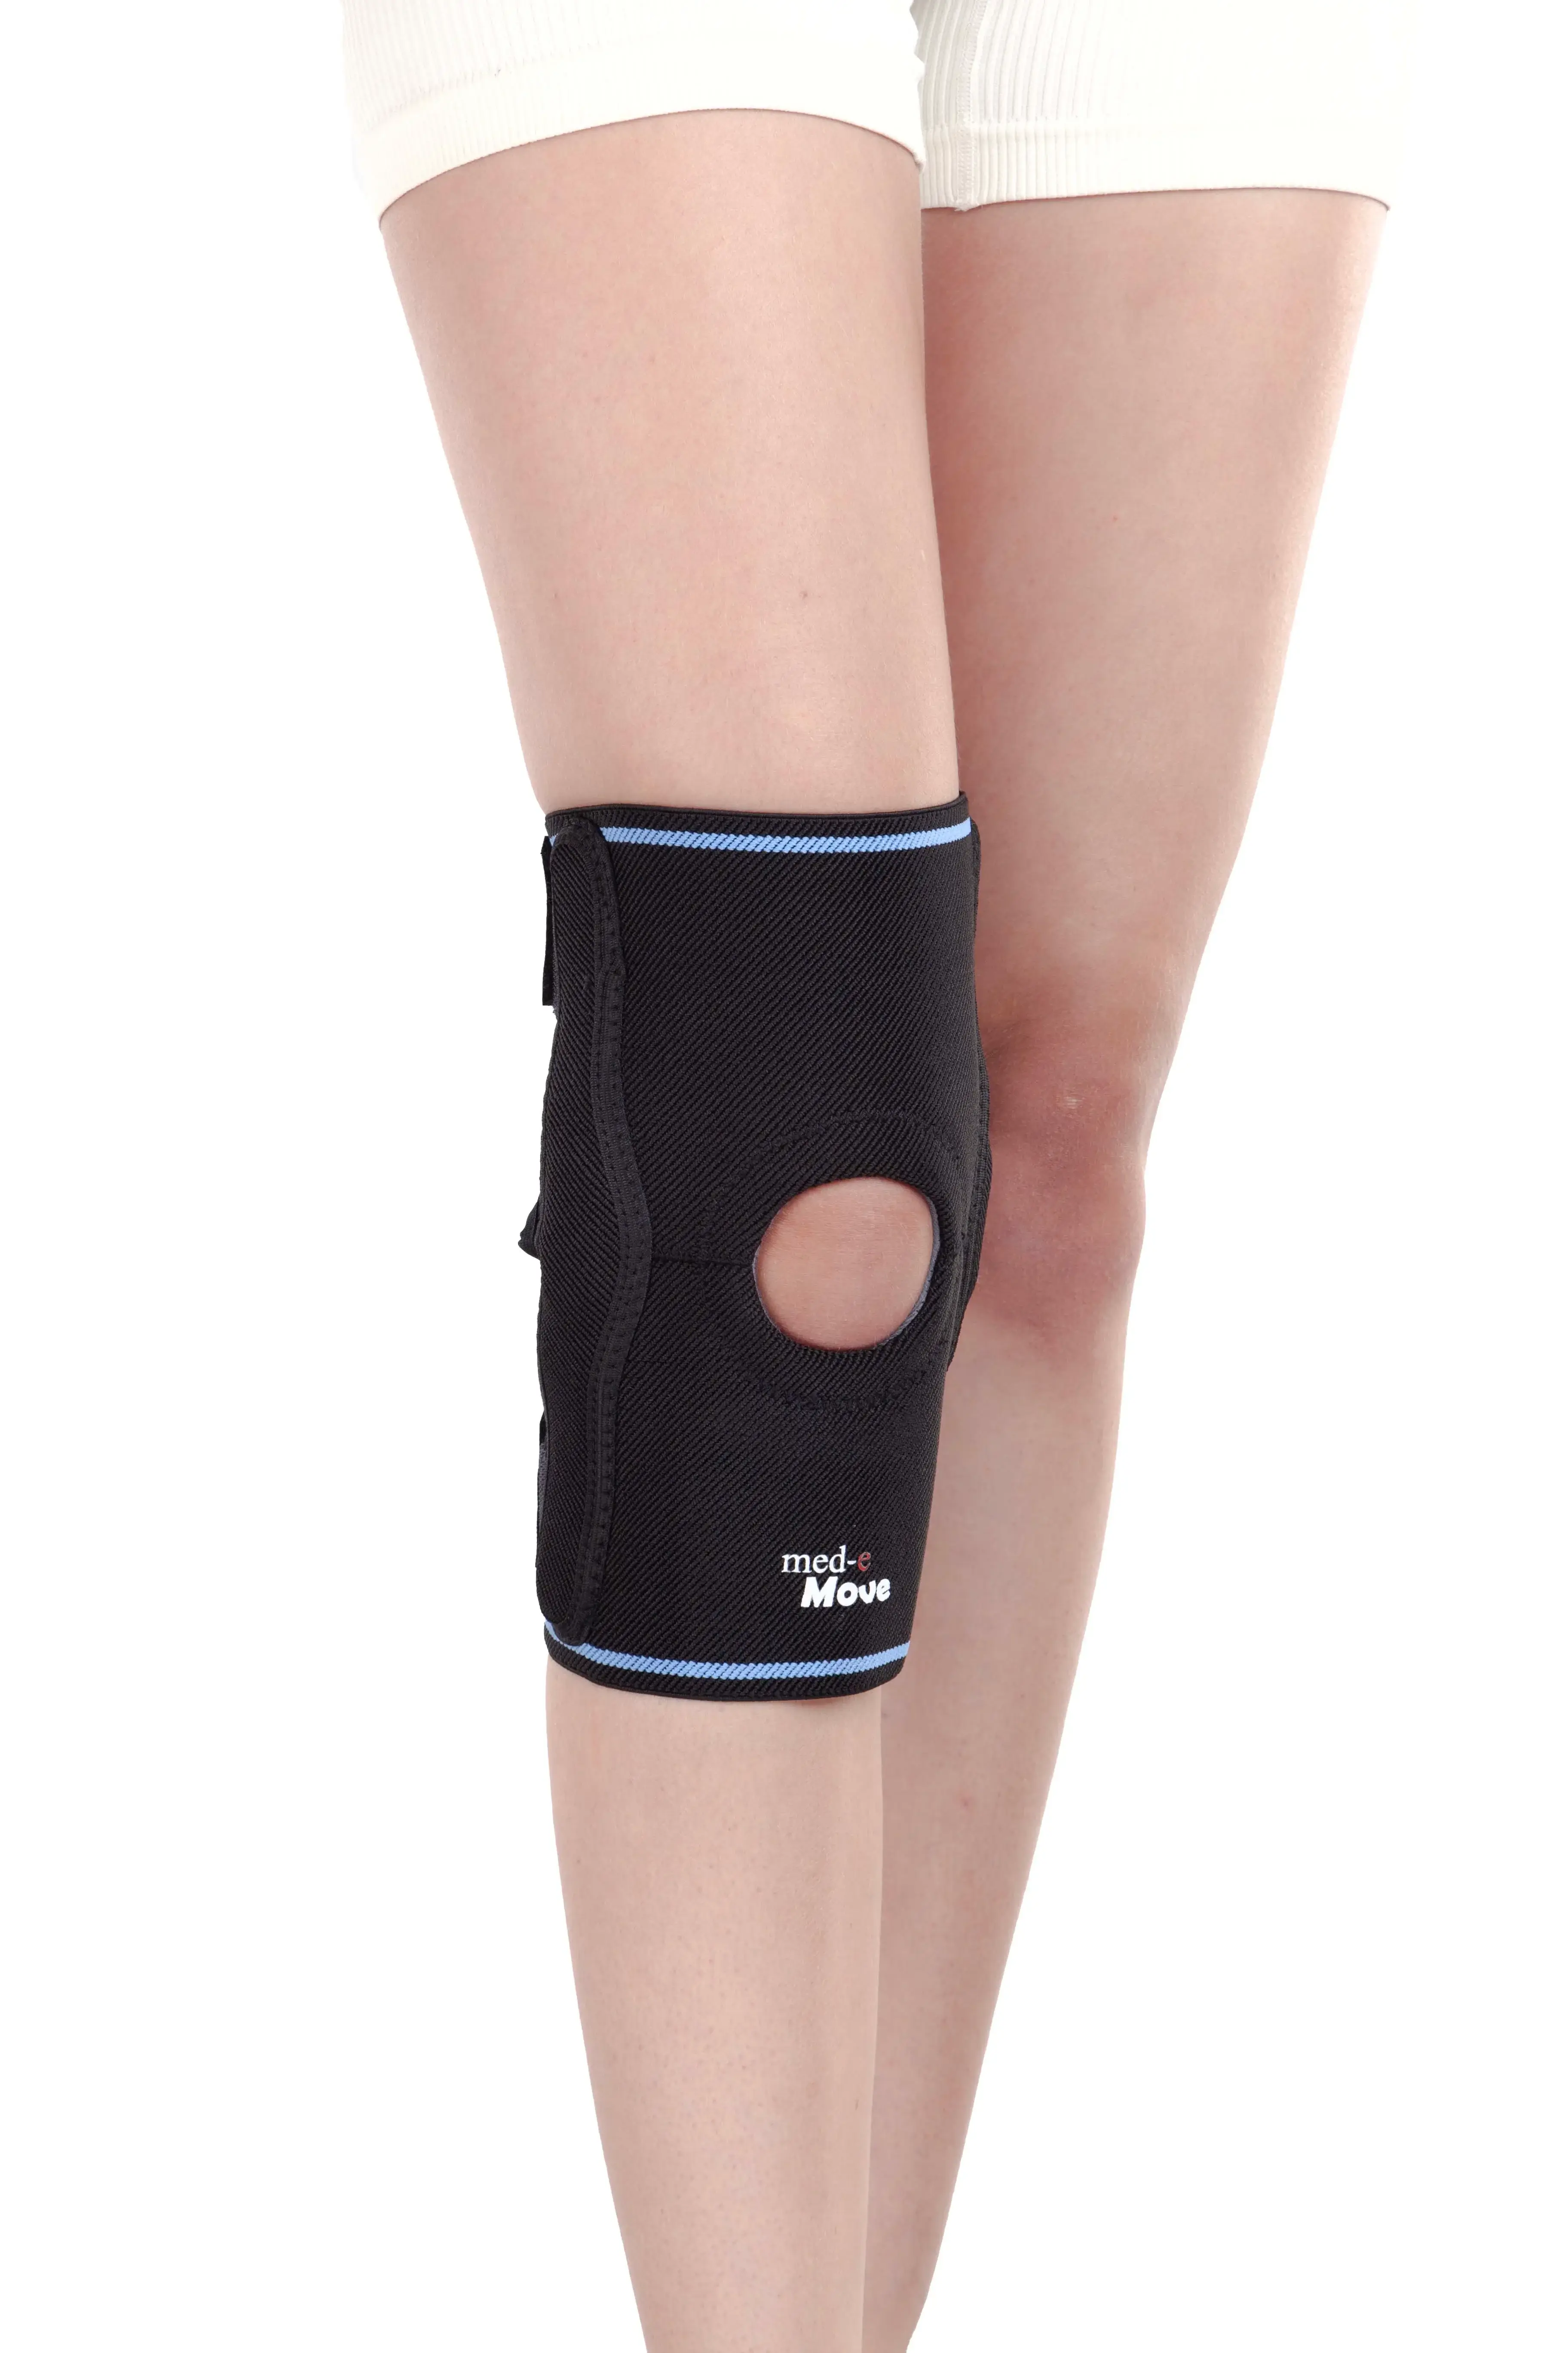 Medemove Elastic Knee Support